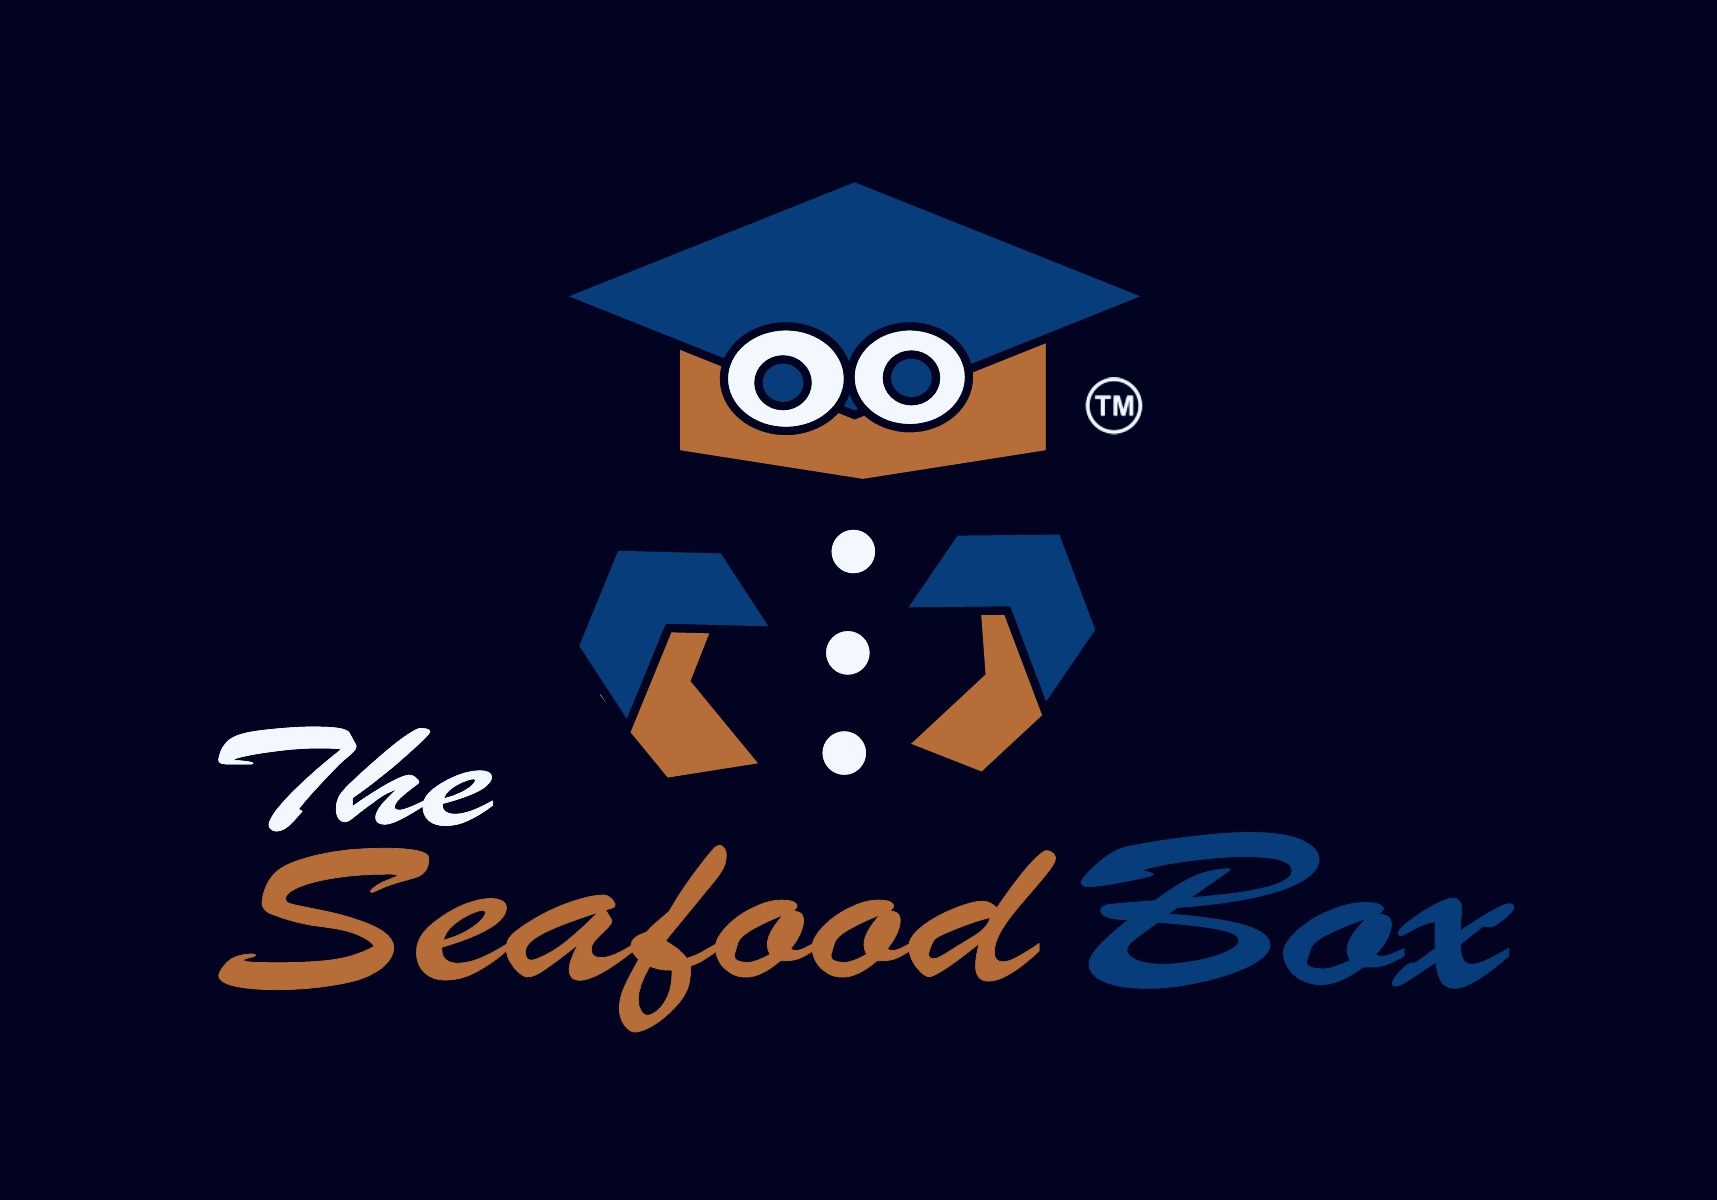 The Seafood Box/Fish Frydays food truck profile image